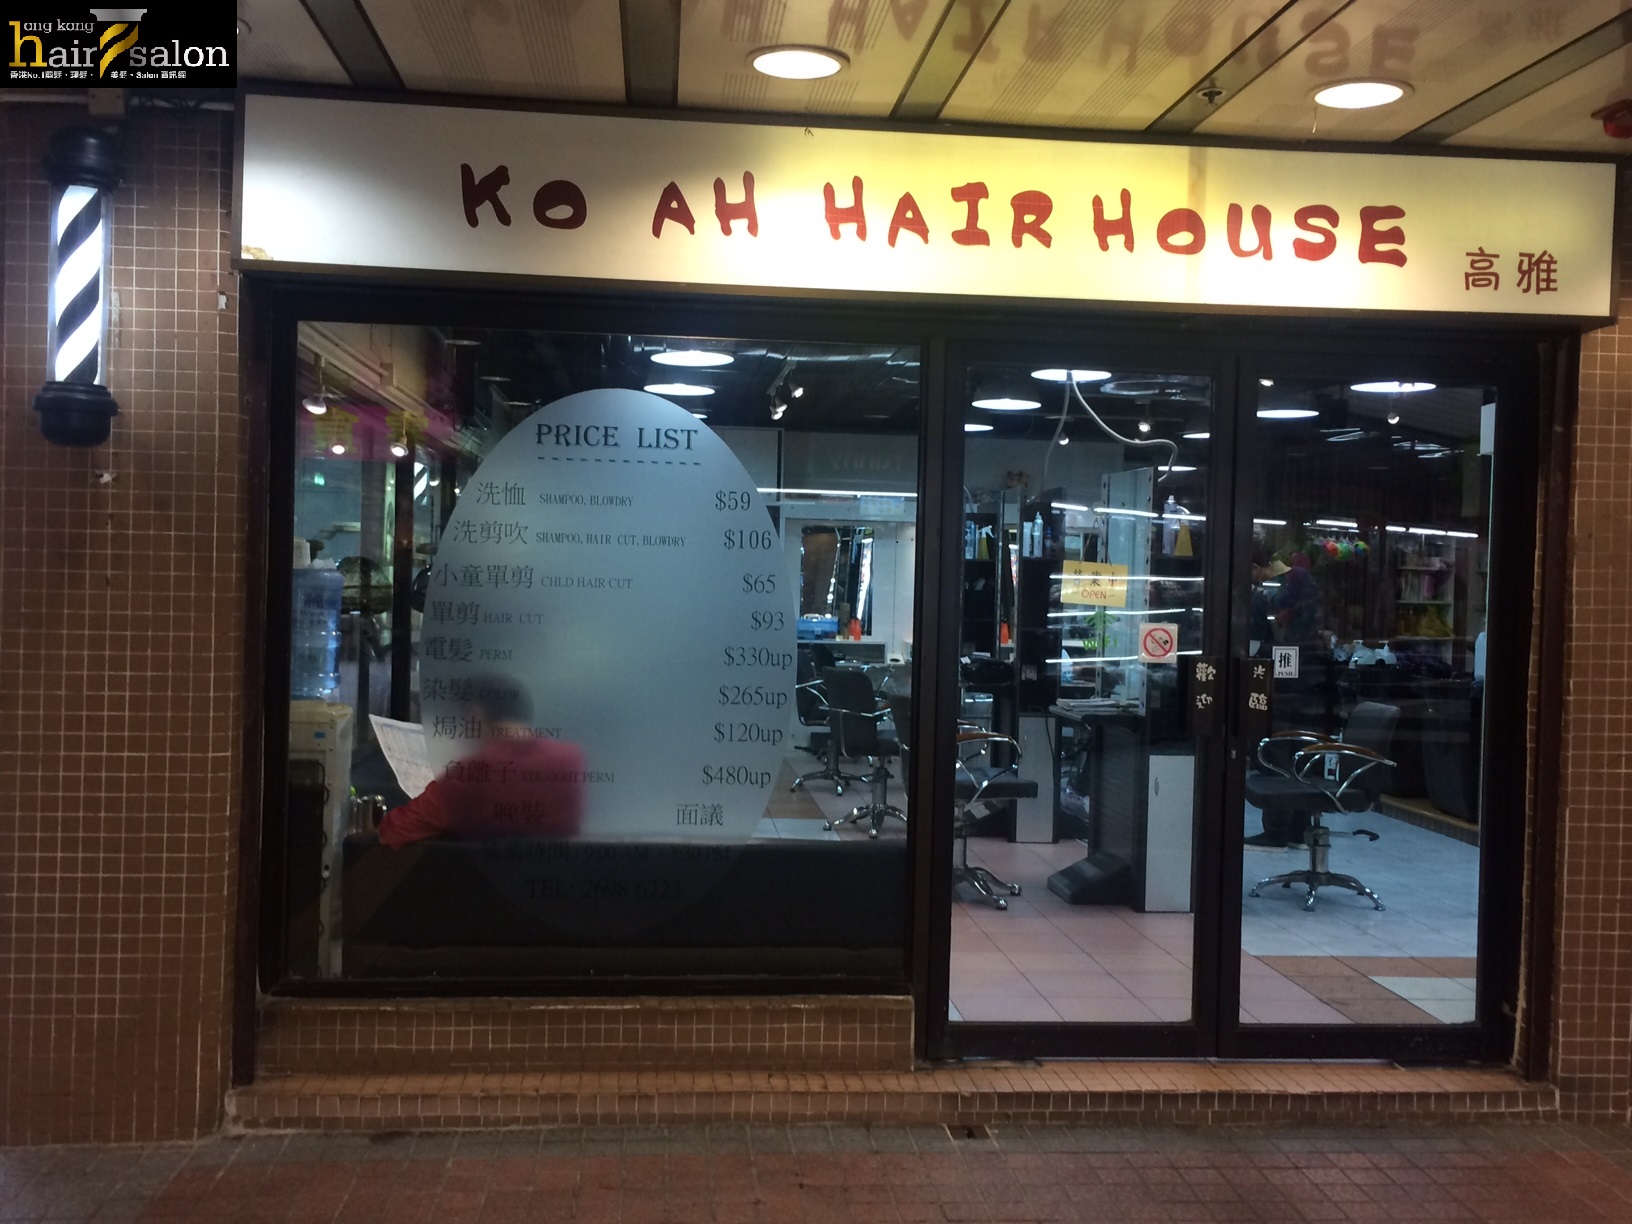 Hair Colouring: 高雅髮型屋 Ko Ah Hair House